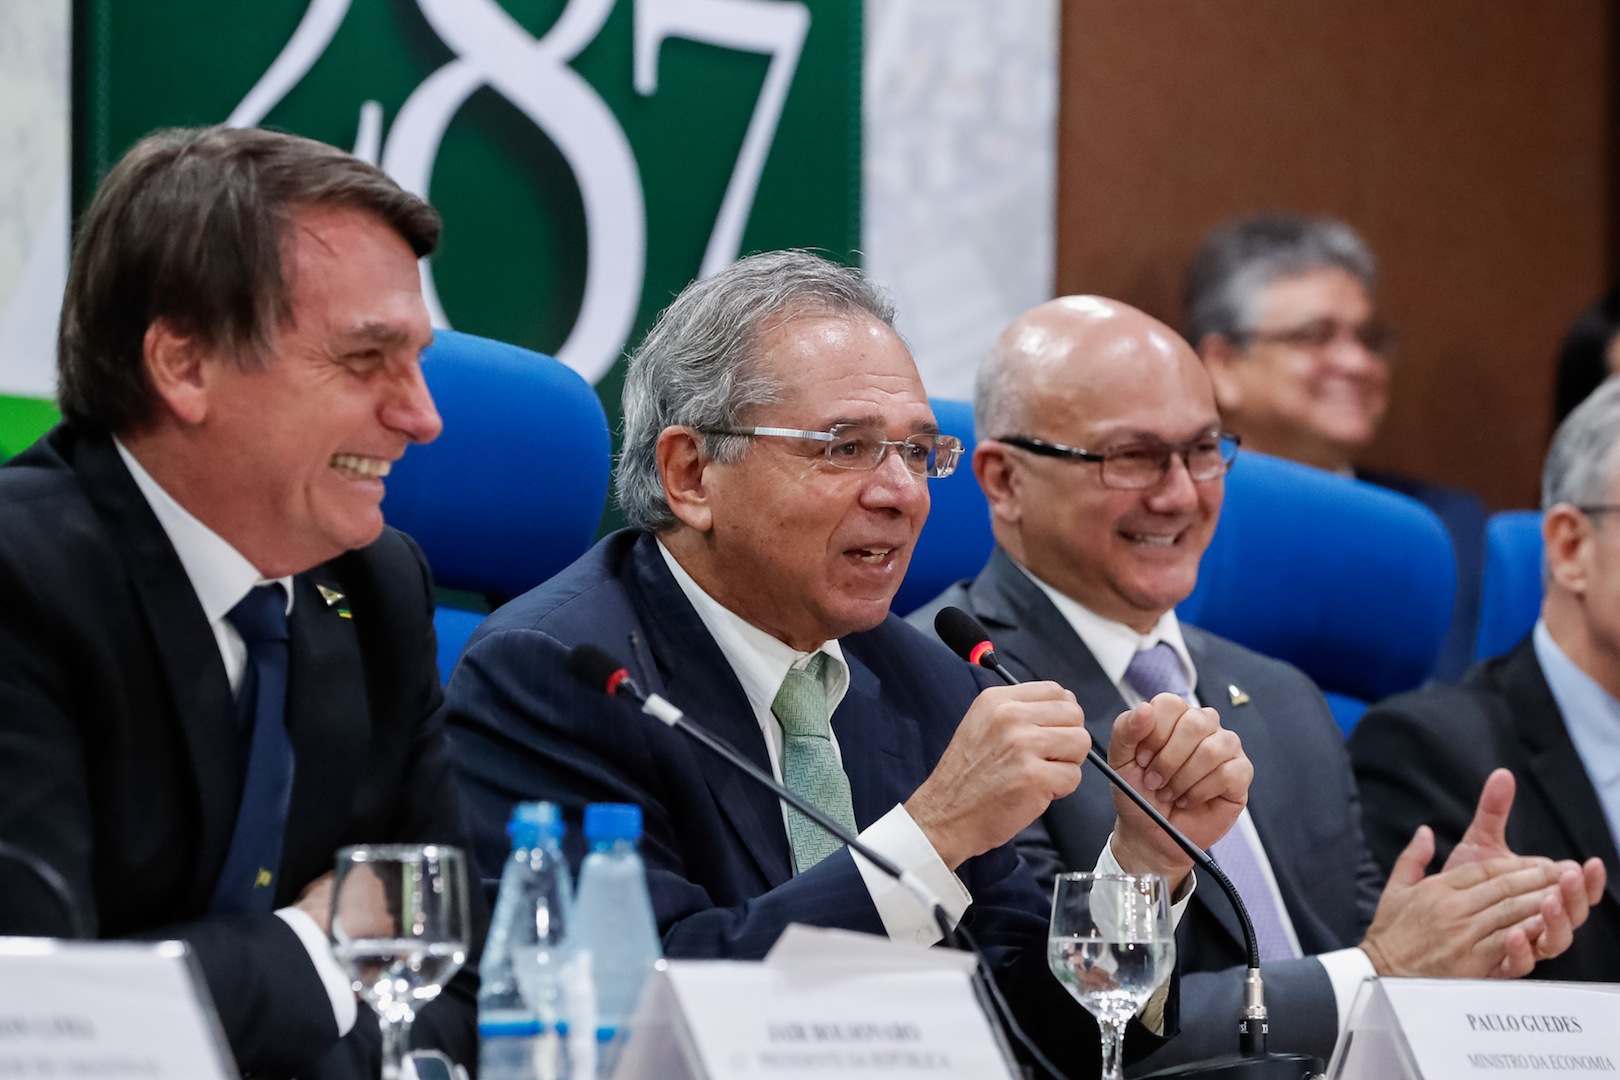 Brazil,President Jair Bolsonaro and Economy Minister, Paulo Guedes, speak in Manaus about Amazon Region